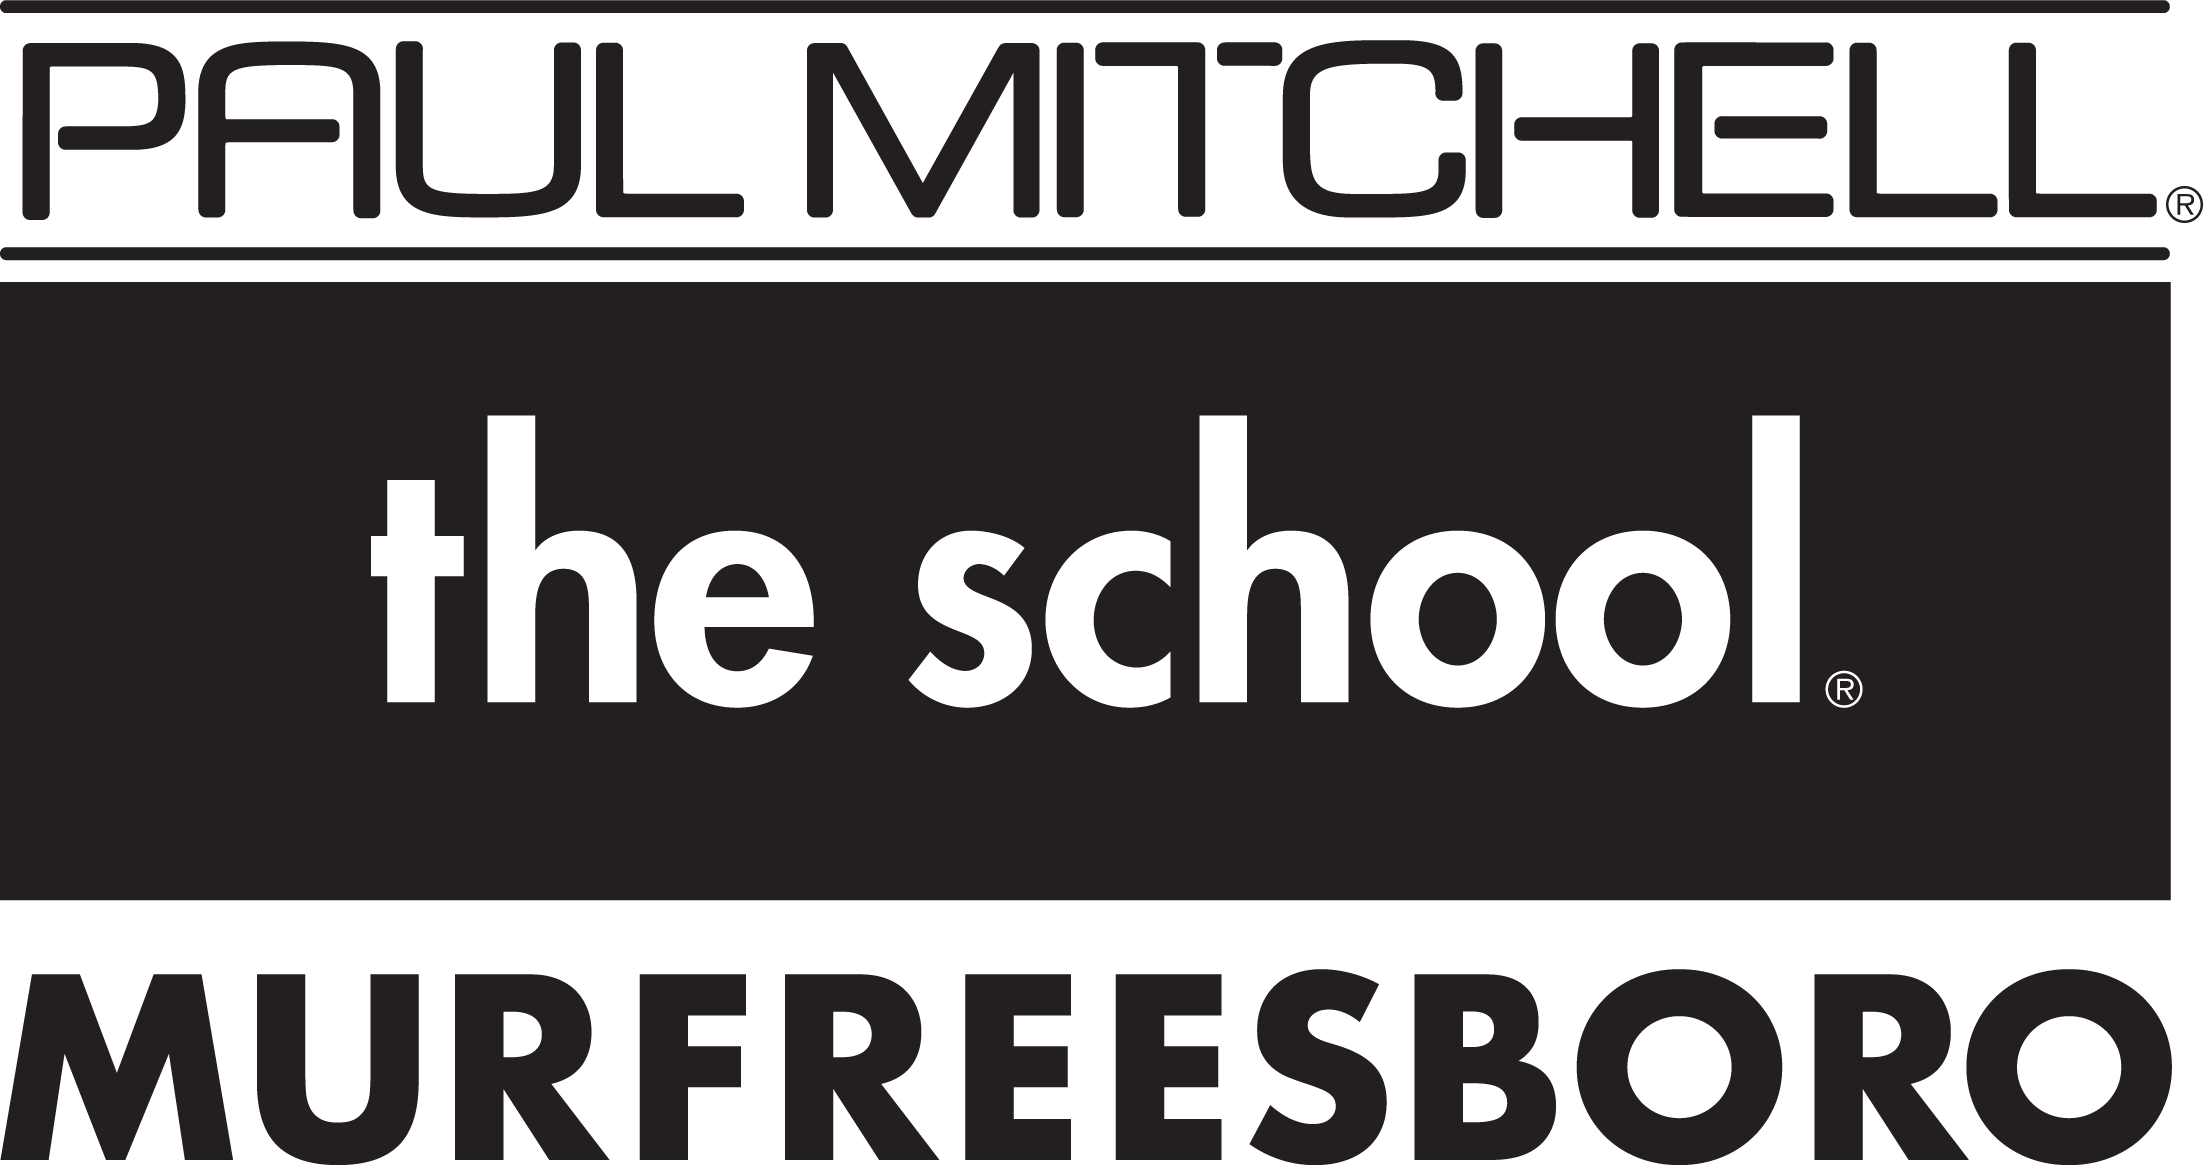 Paul Mitchell Schools catalog